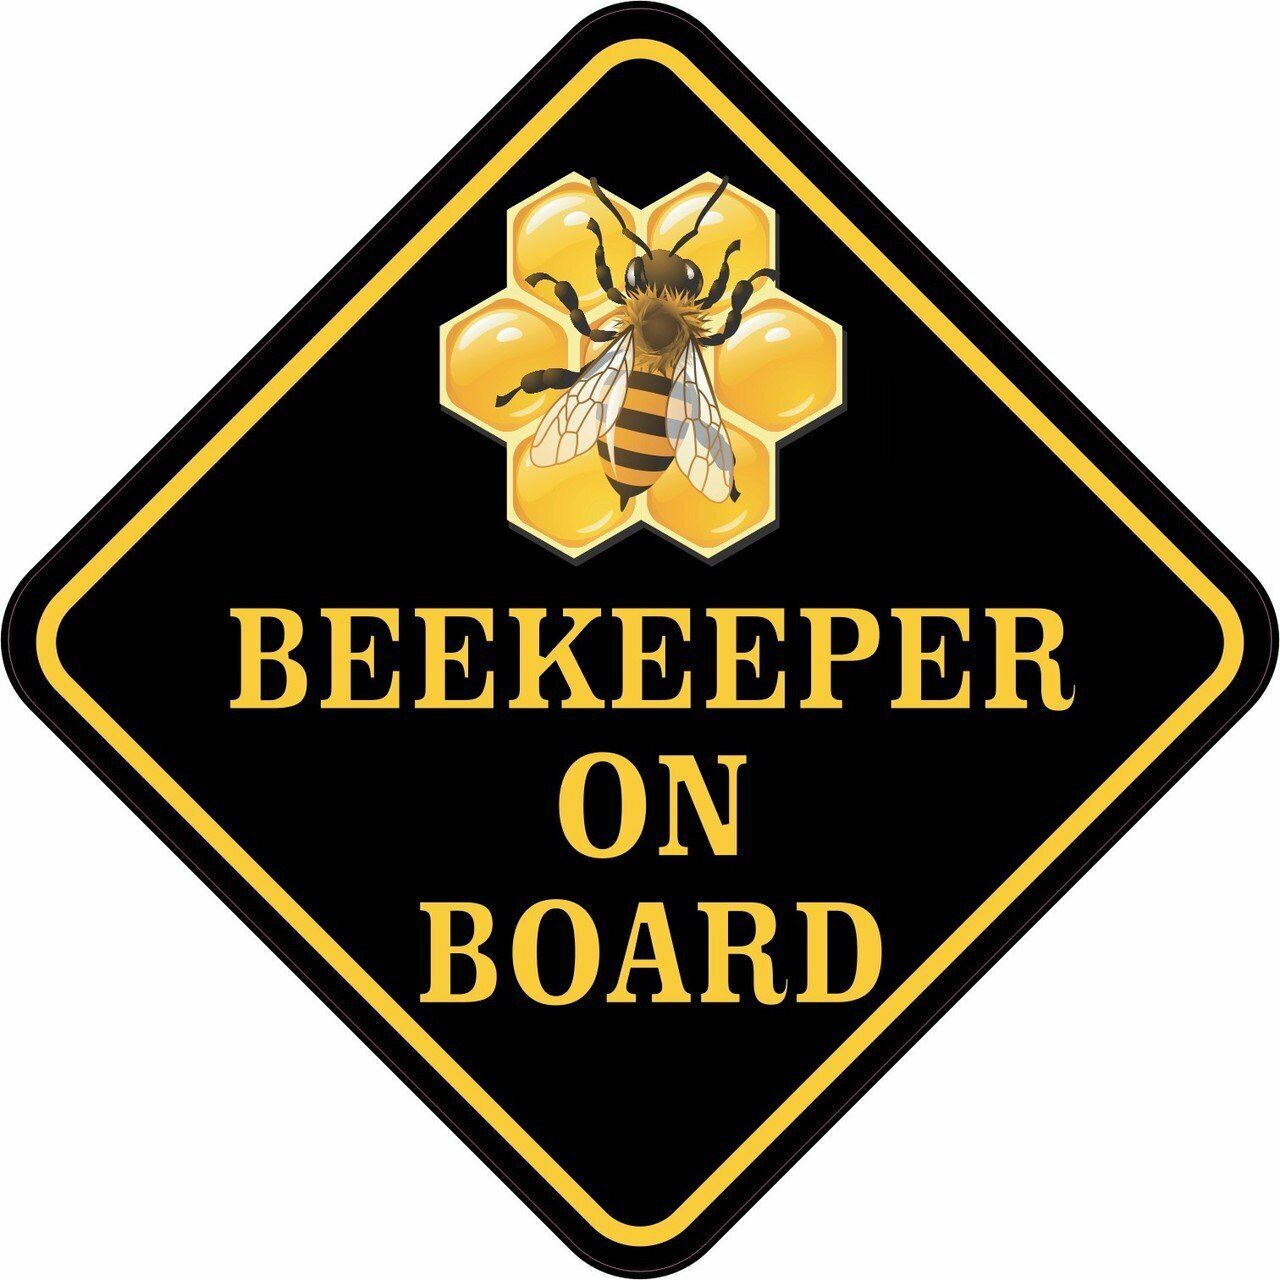 StickerTalk 5in x 5in Beekeeper on Board Sticker Car Truck Vehicle Bumper Decal